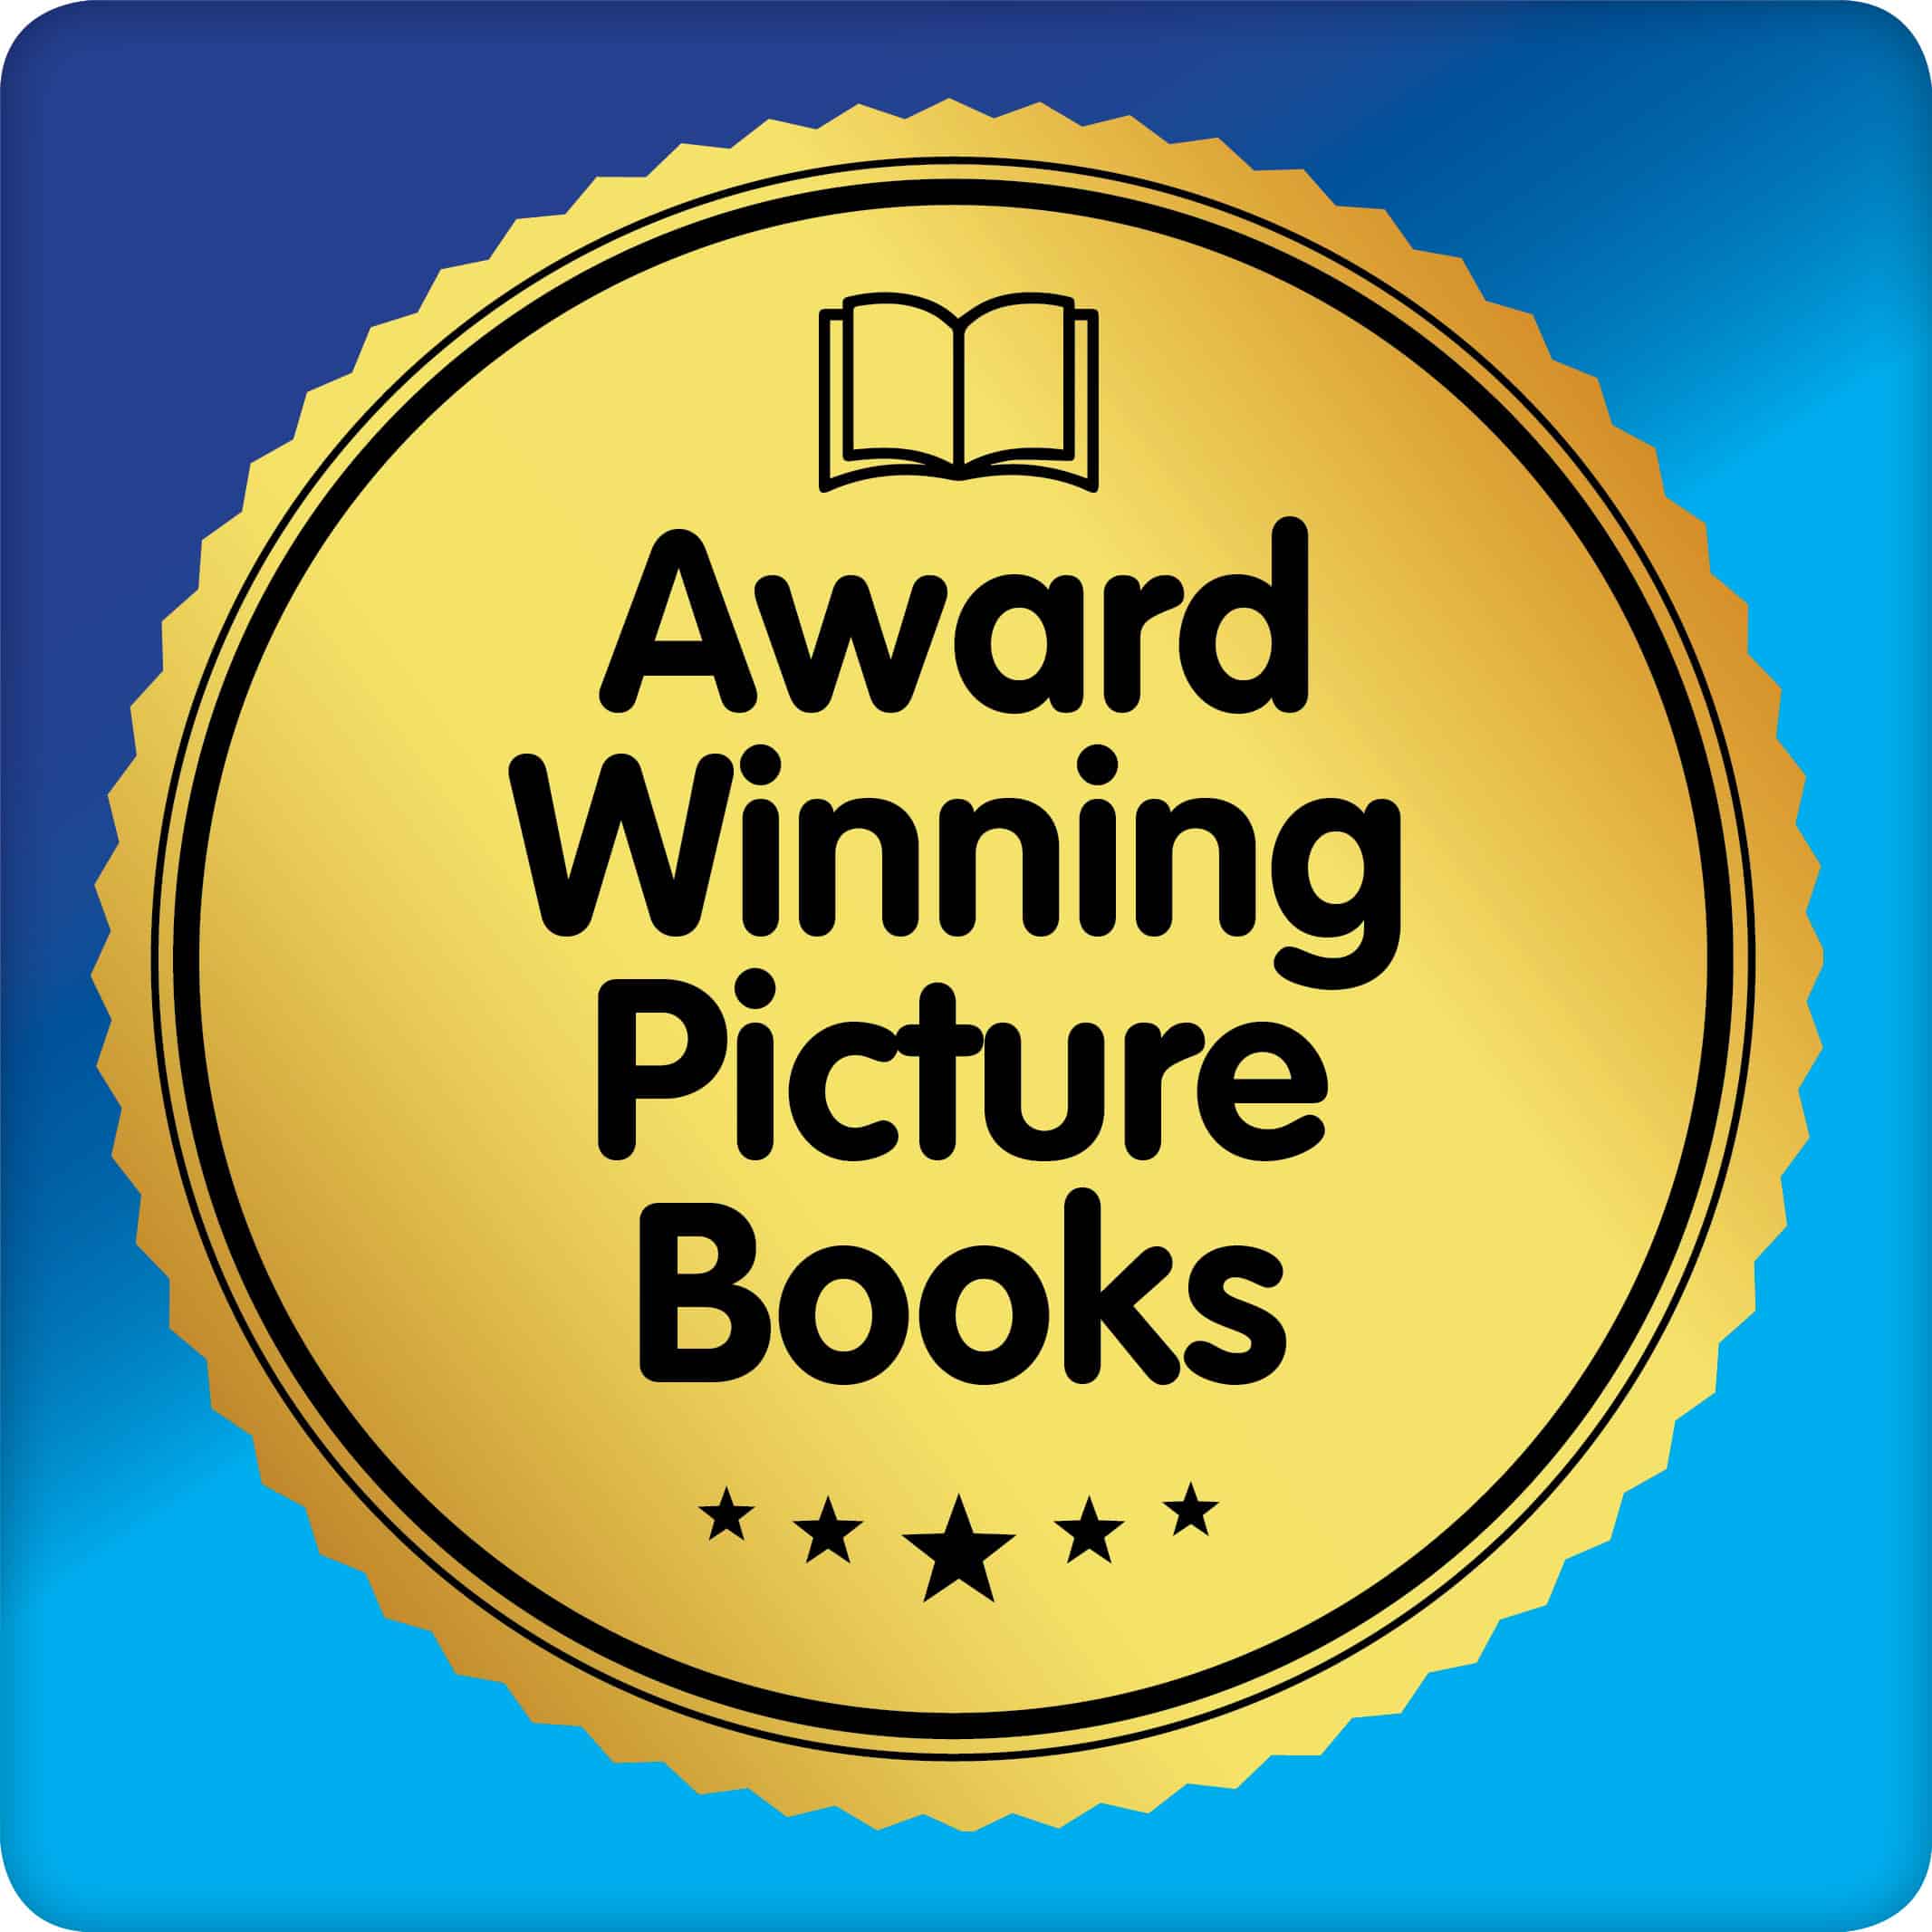 Award_Winning_Picture_Books_Button_1024x1024pixels